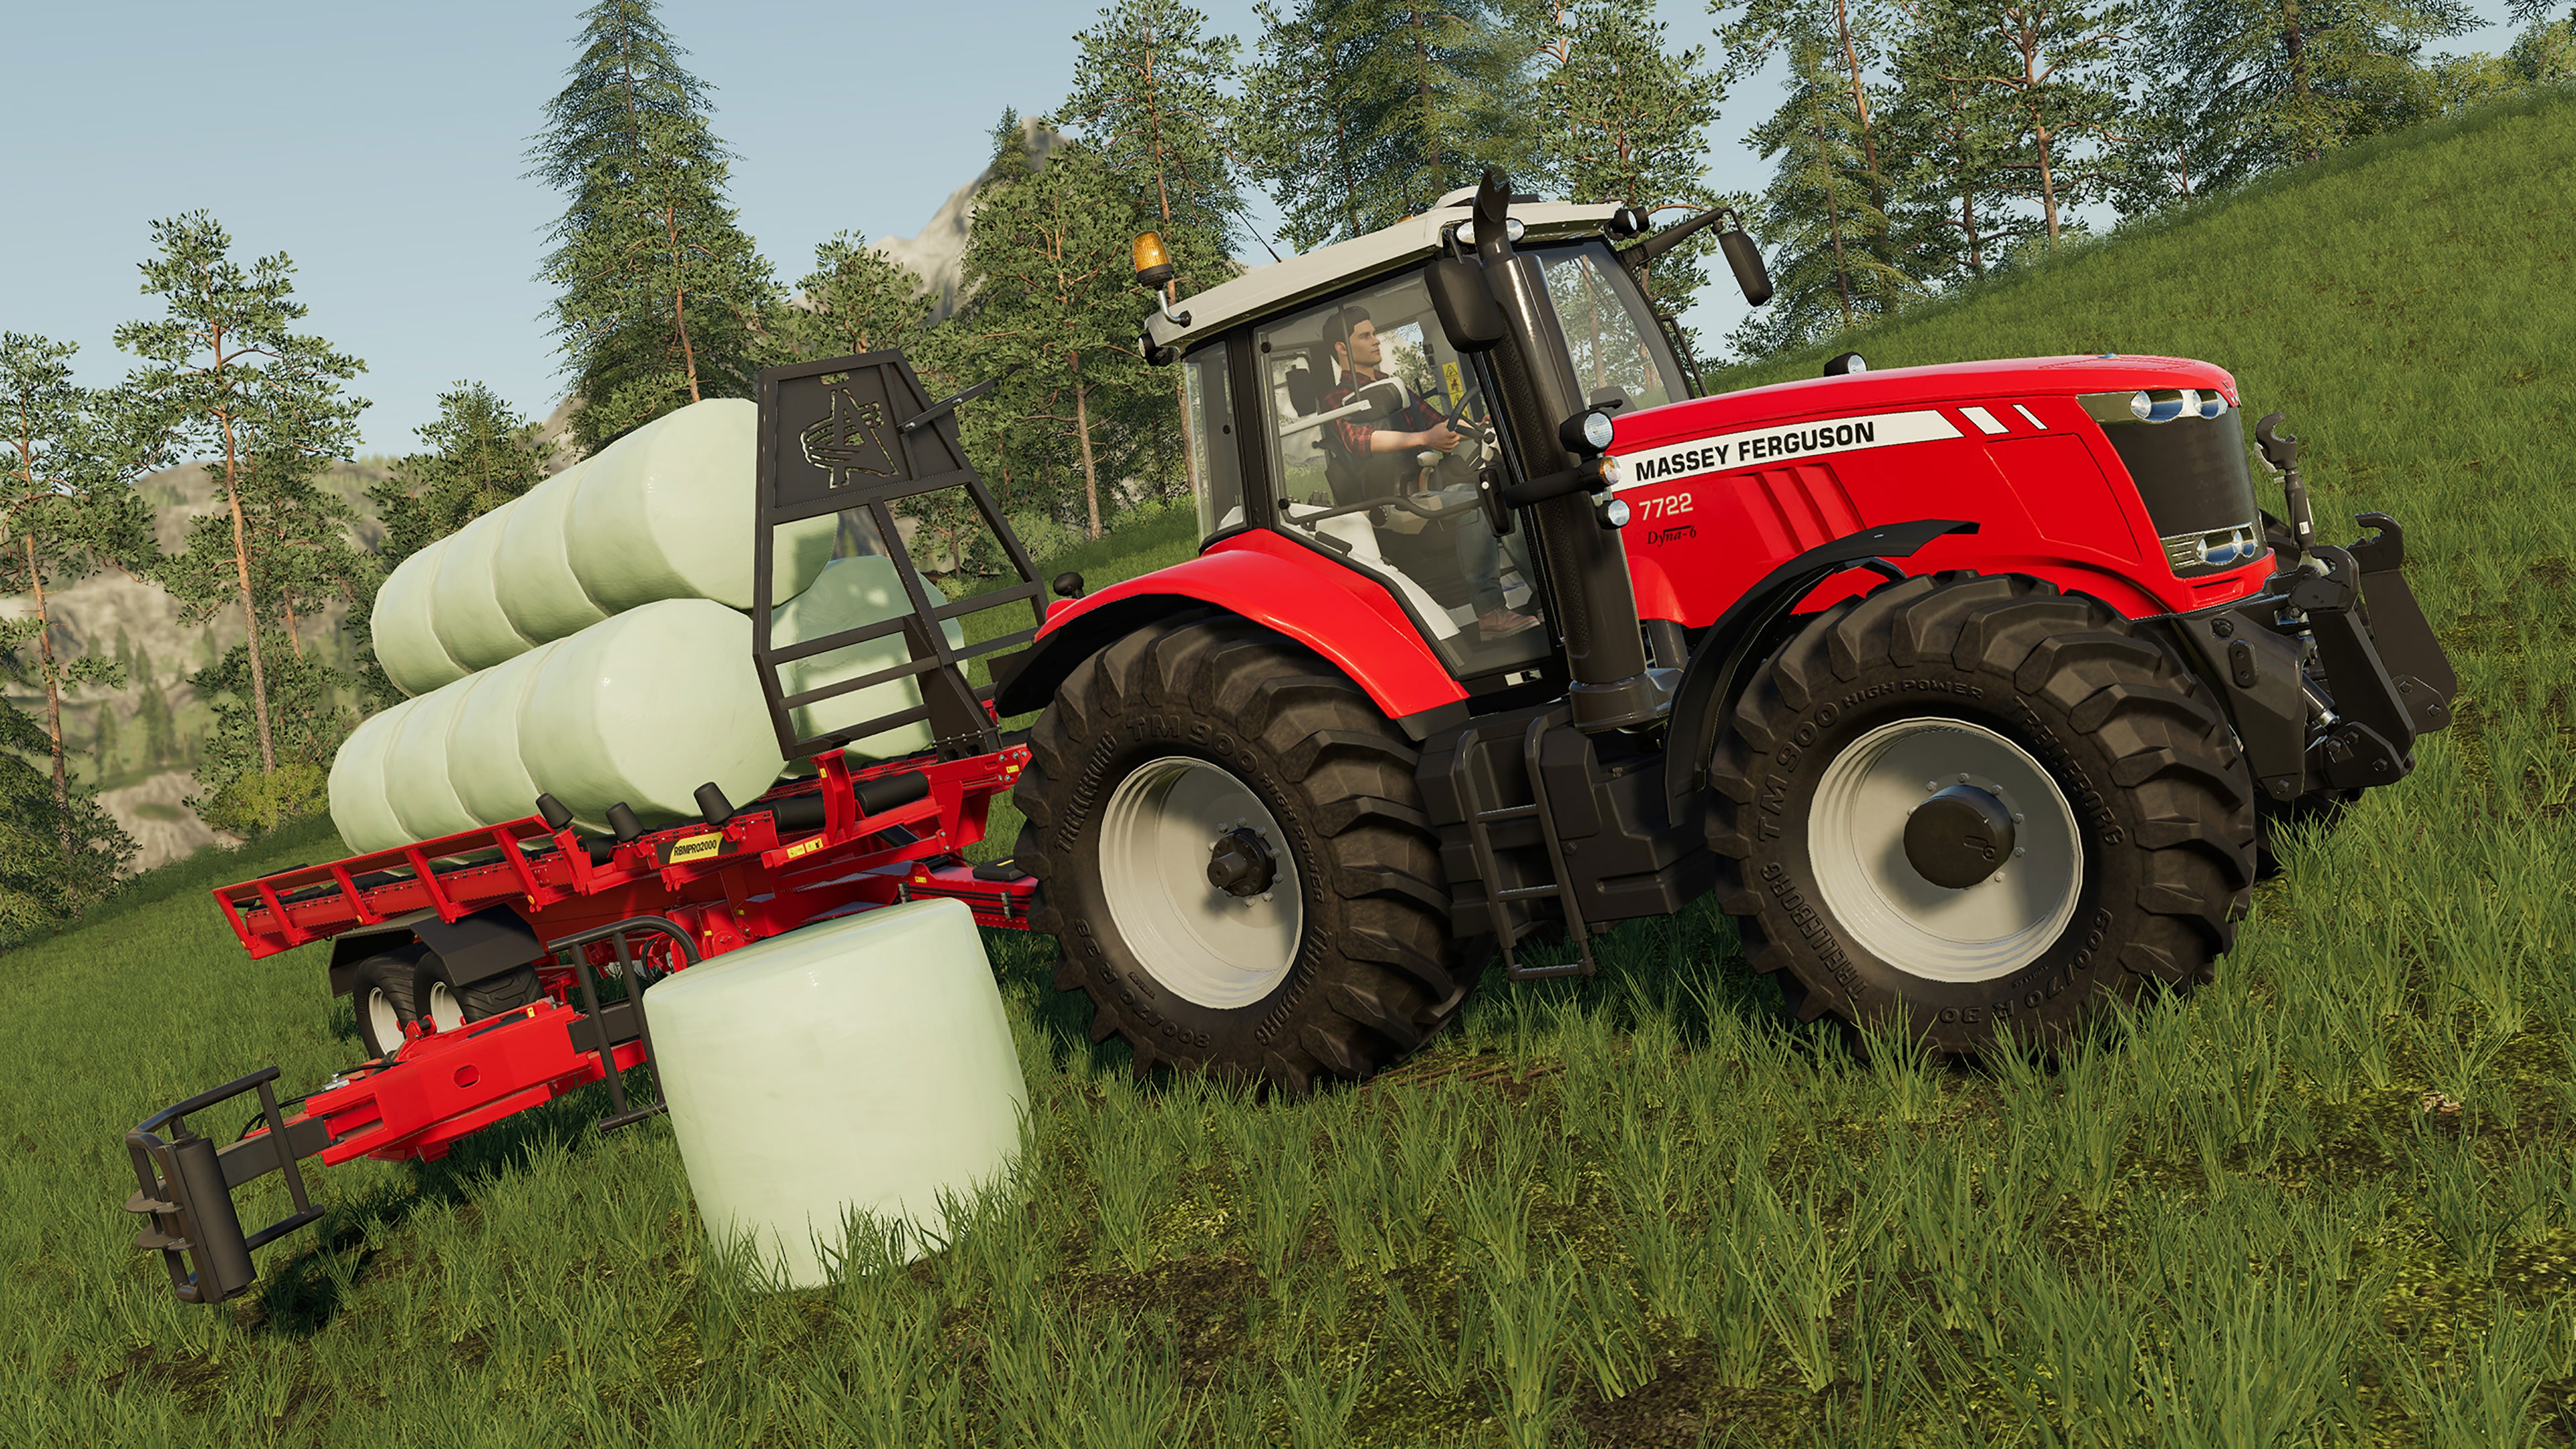 ps4 farm simulator